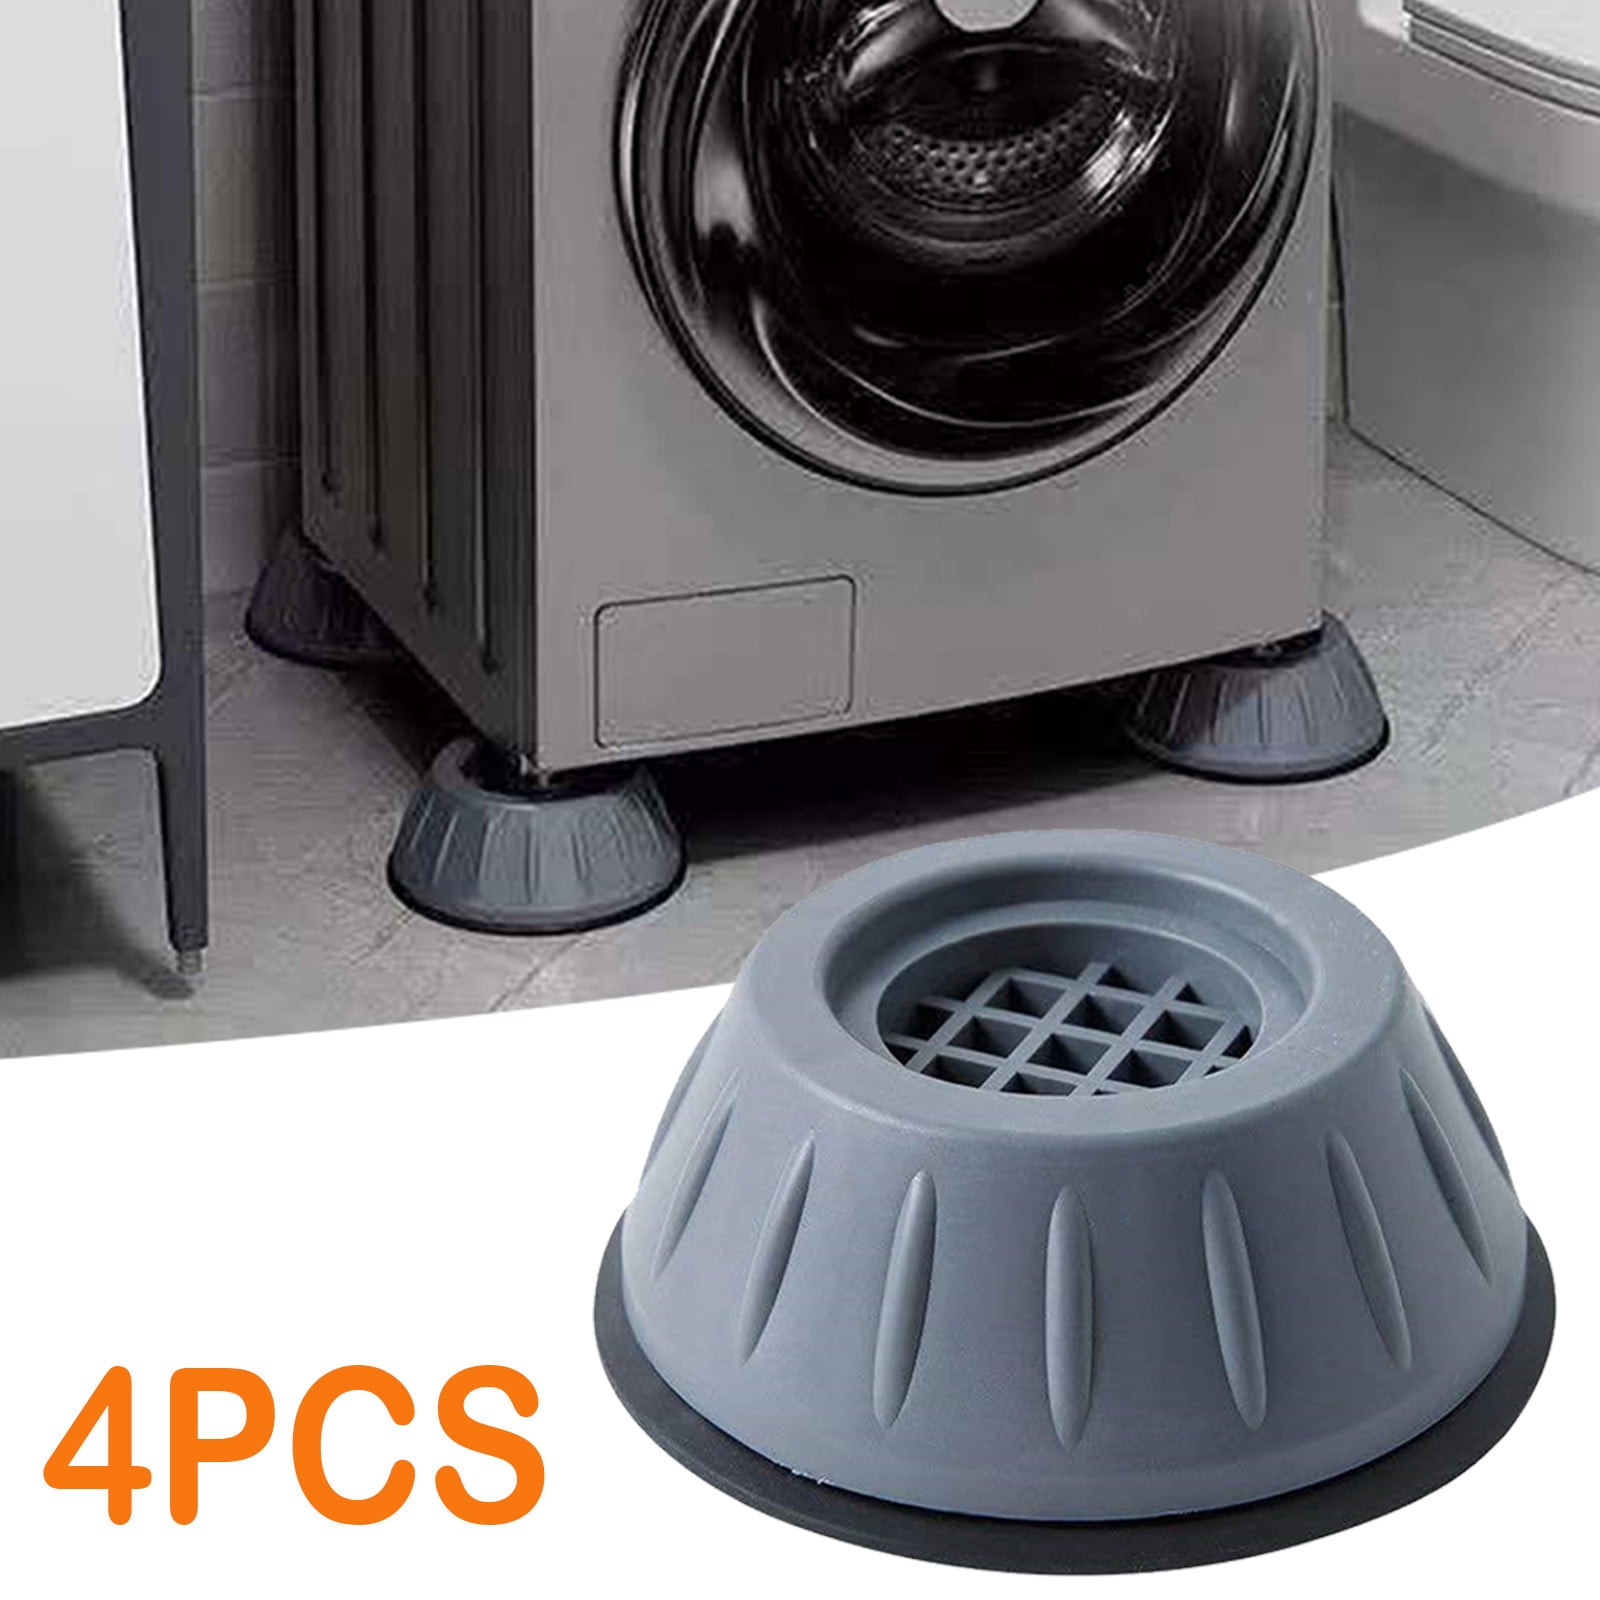 4 Anti-Vibration and Anti-Walk Pads for Washer and Dryer Washing Machine Feet 